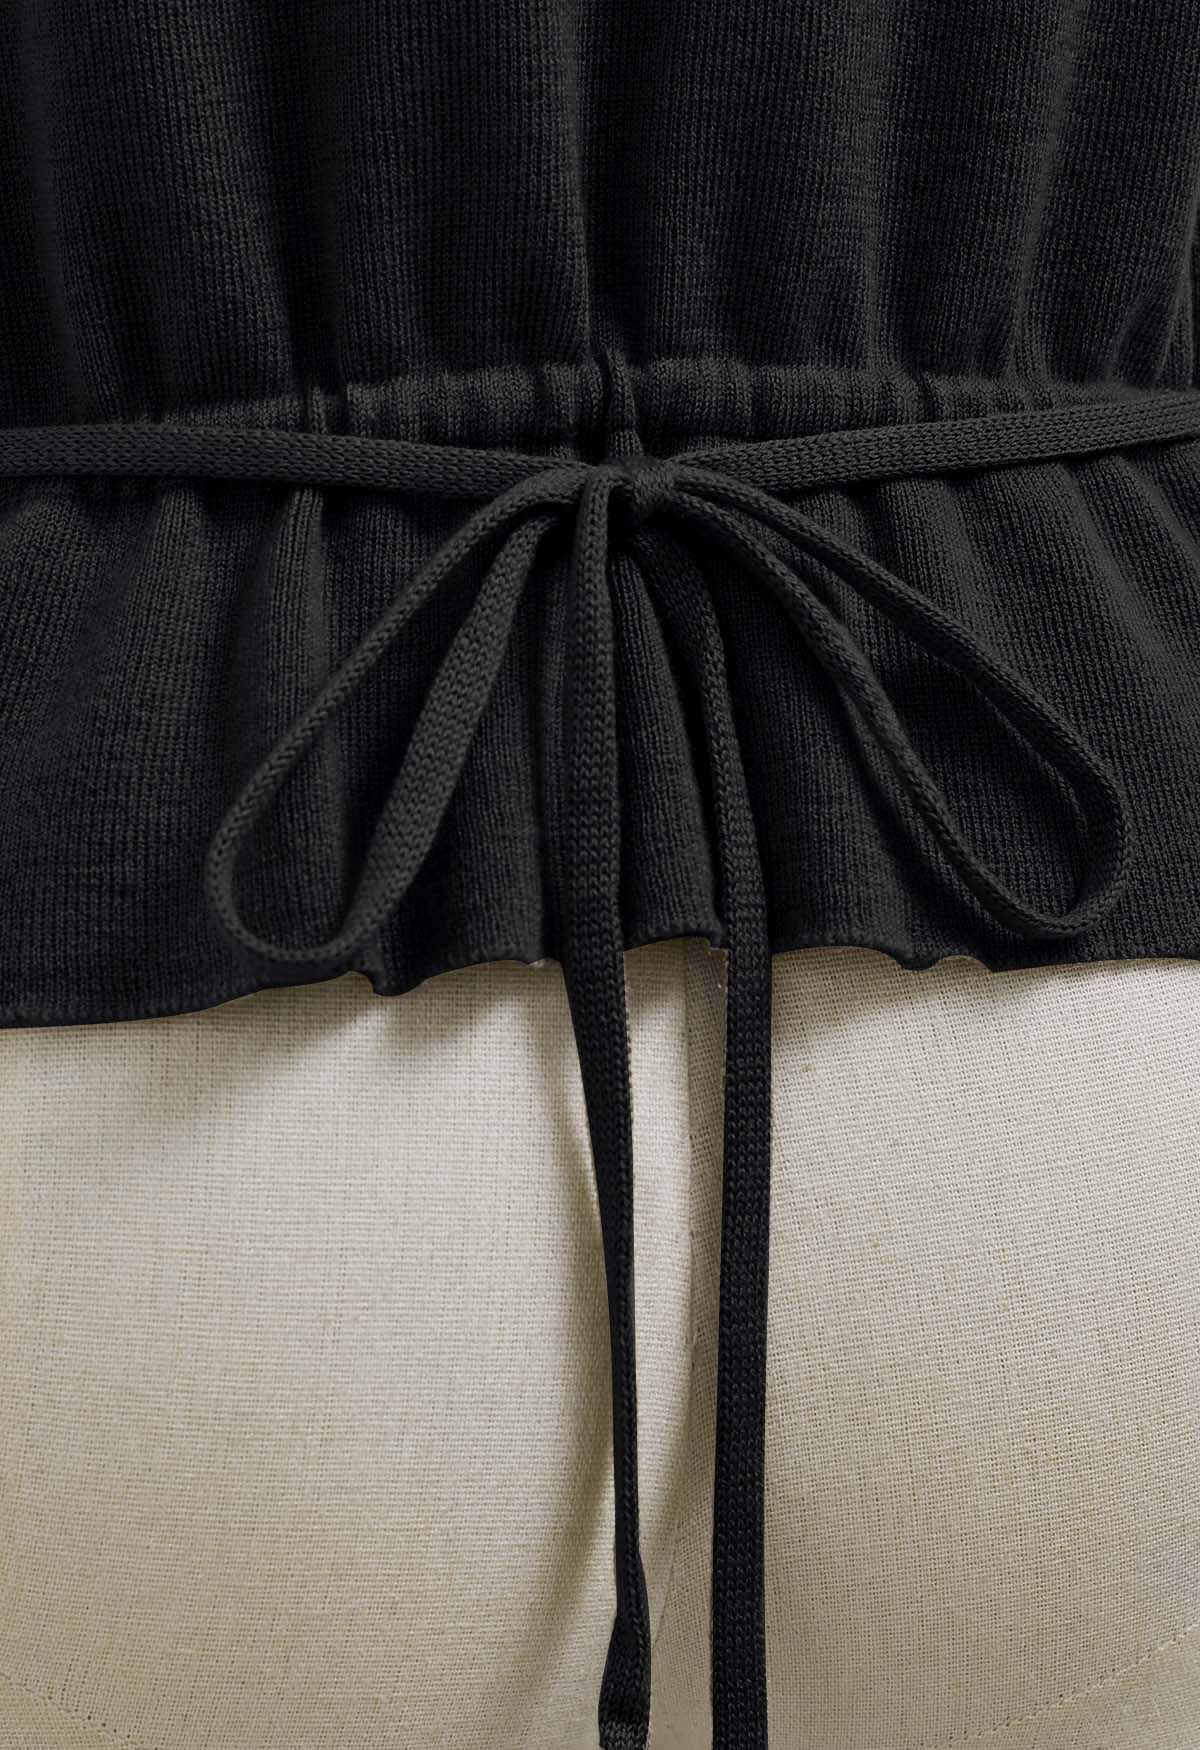 Back Drawstring Waist Mock Neck Knit Top in Black